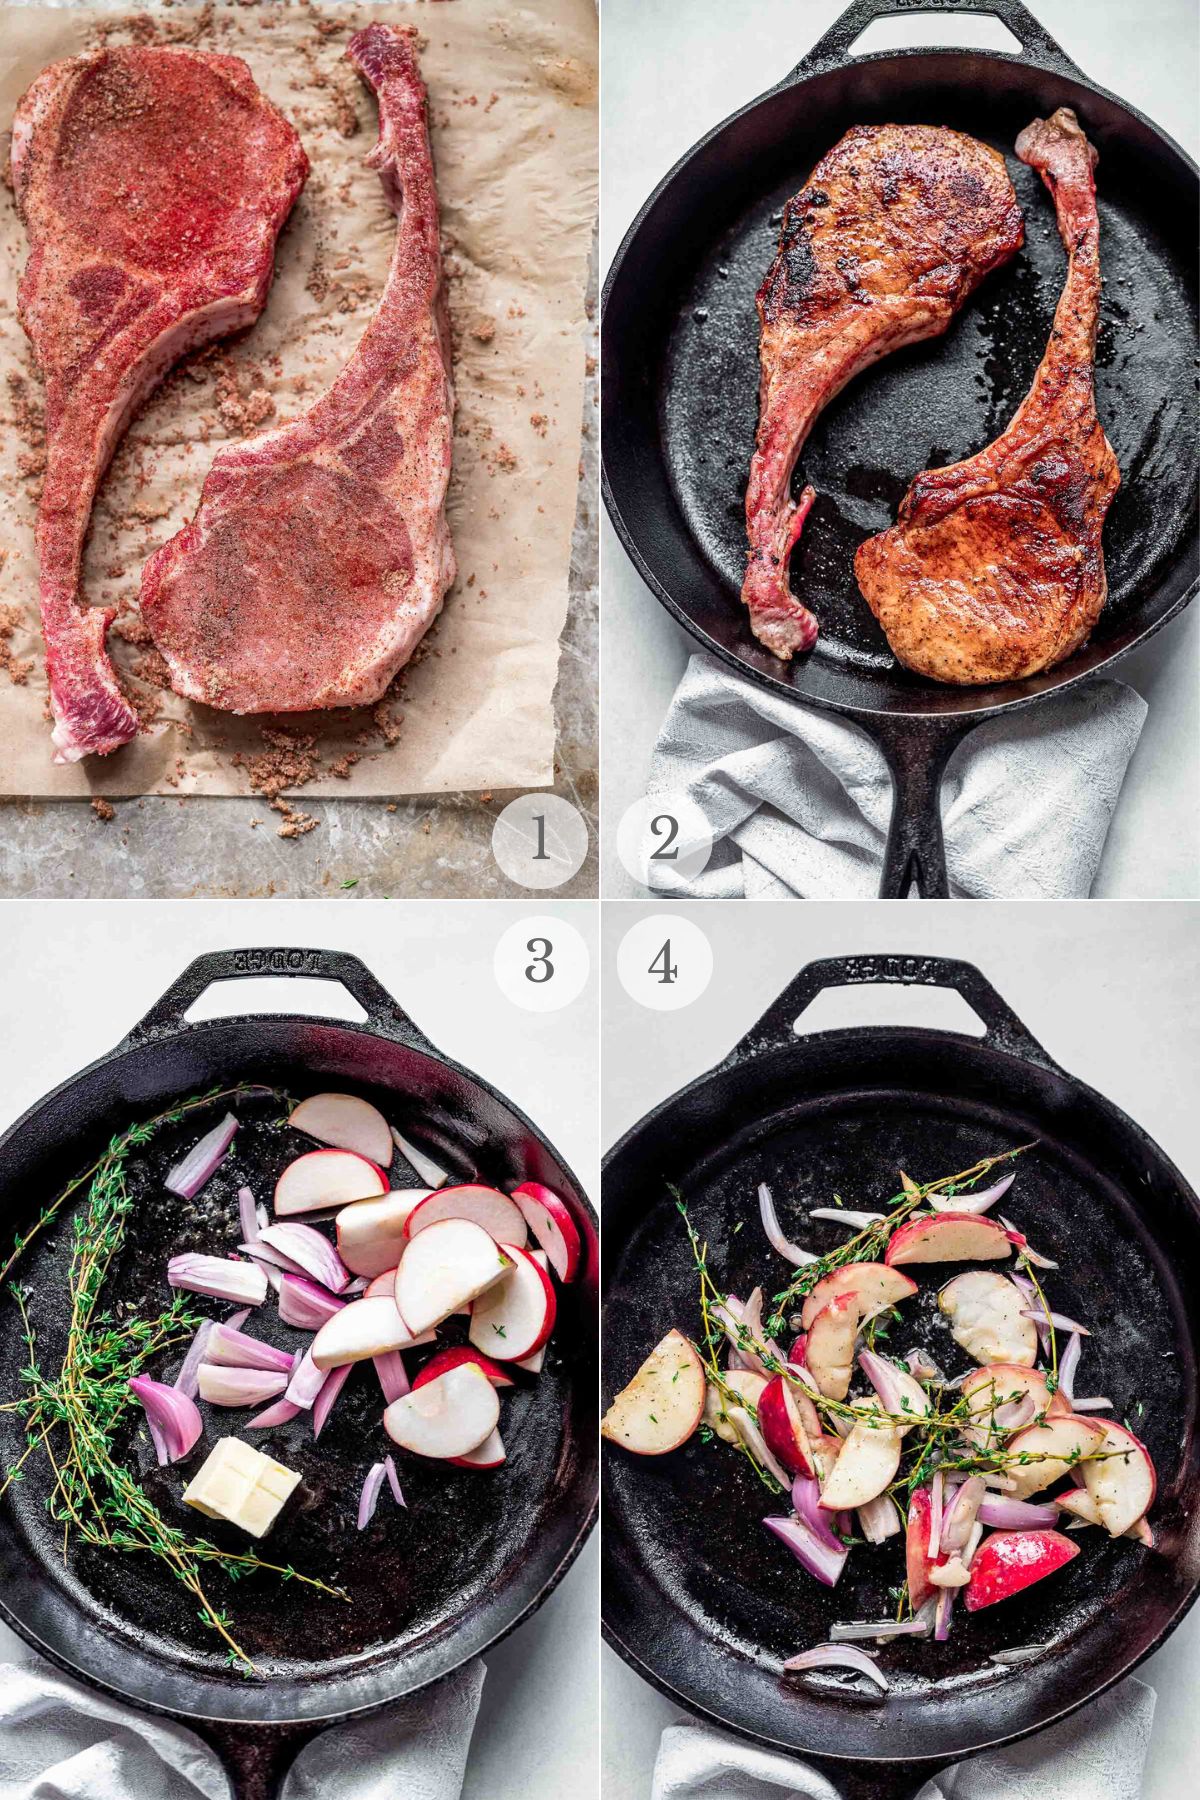 pan seared pork chops recipe steps 1-4.